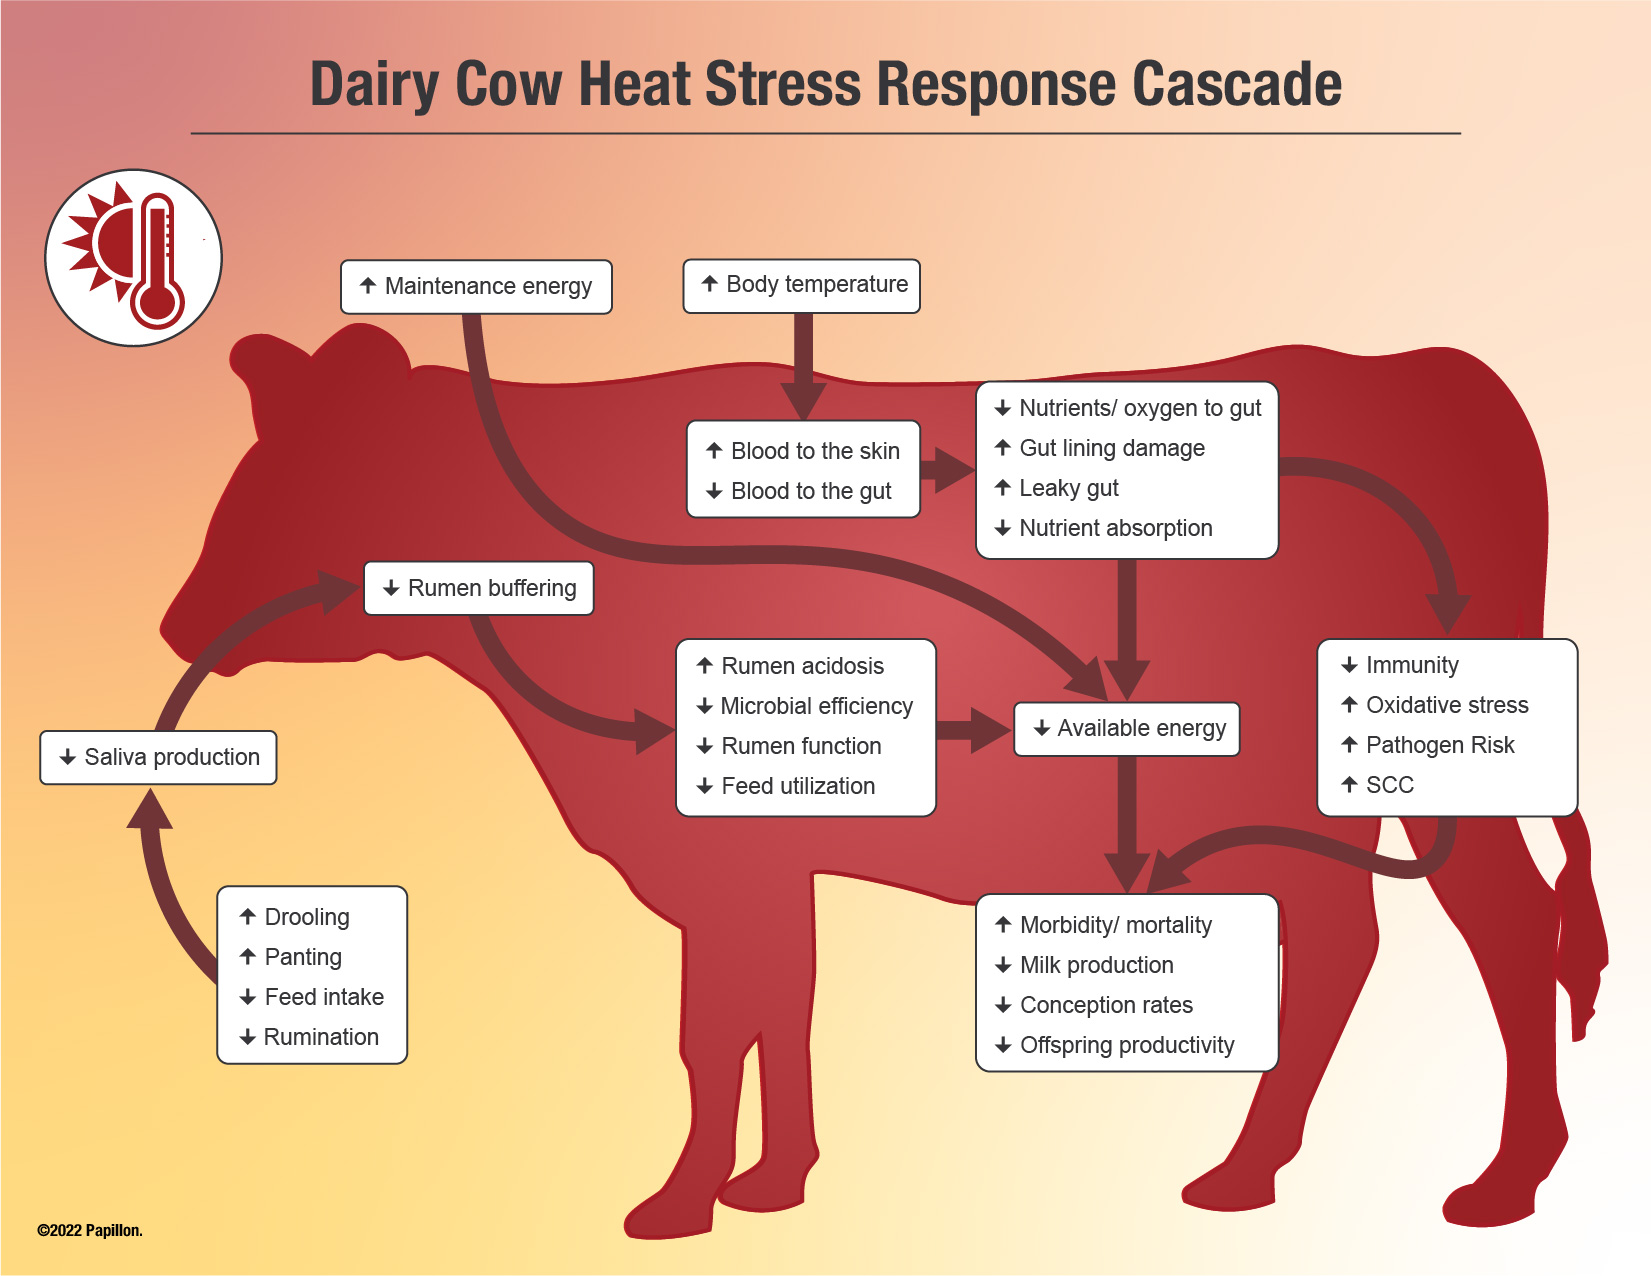 Heat Stress: Handling Cattle Through High Heat Humidity Indexes